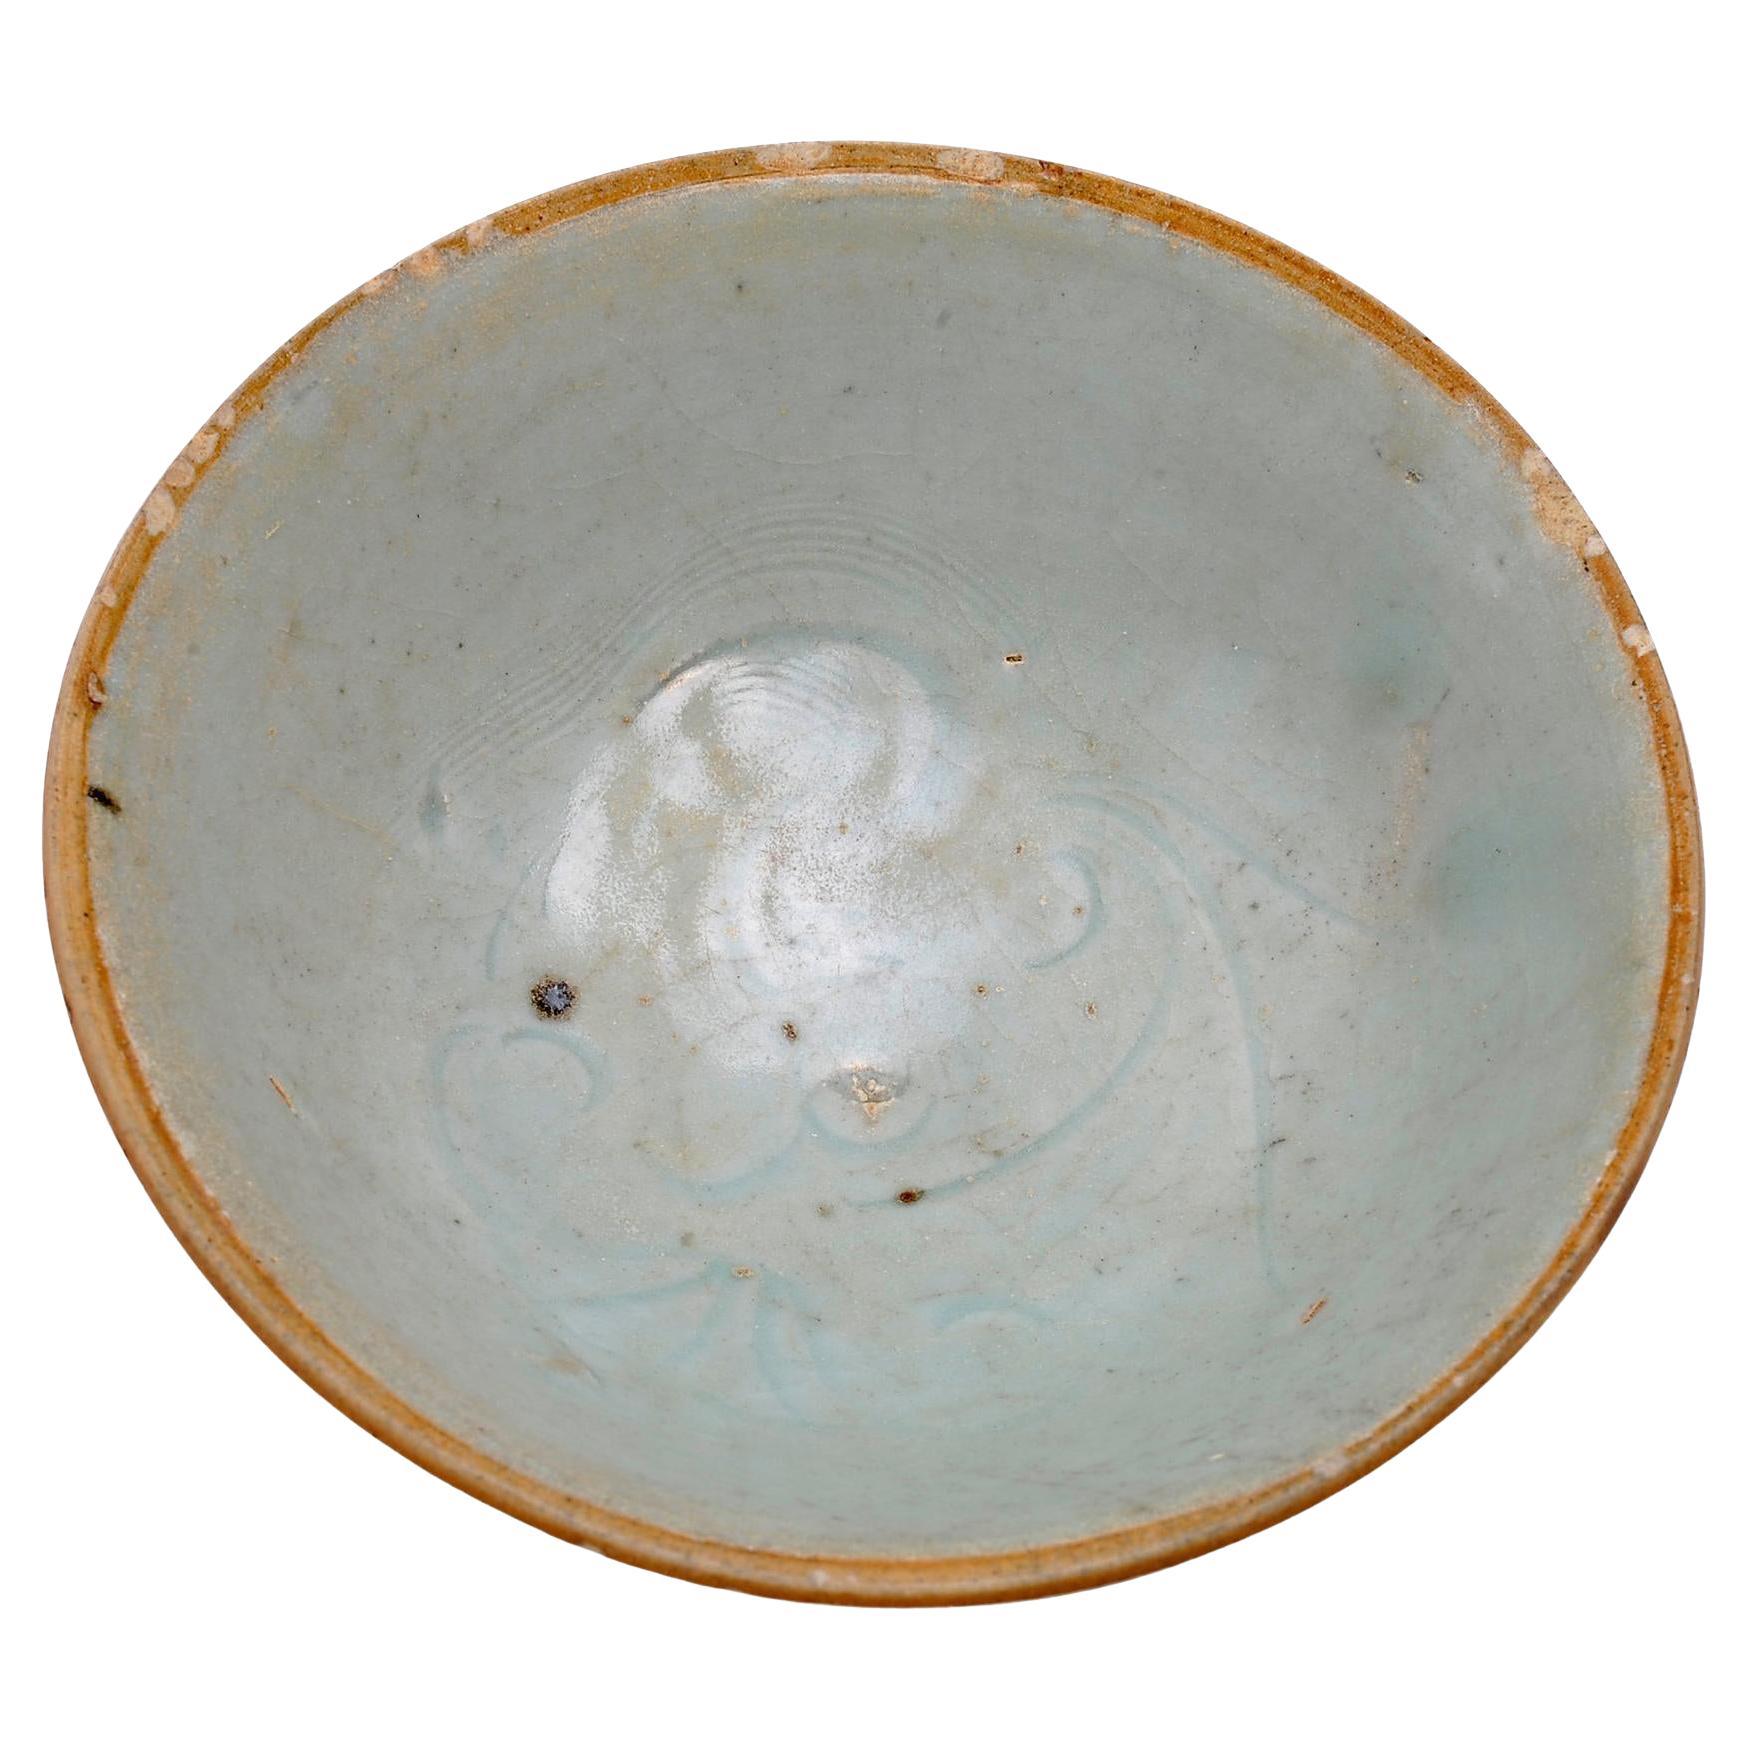 Antique Chinese Celadon Little Bowl